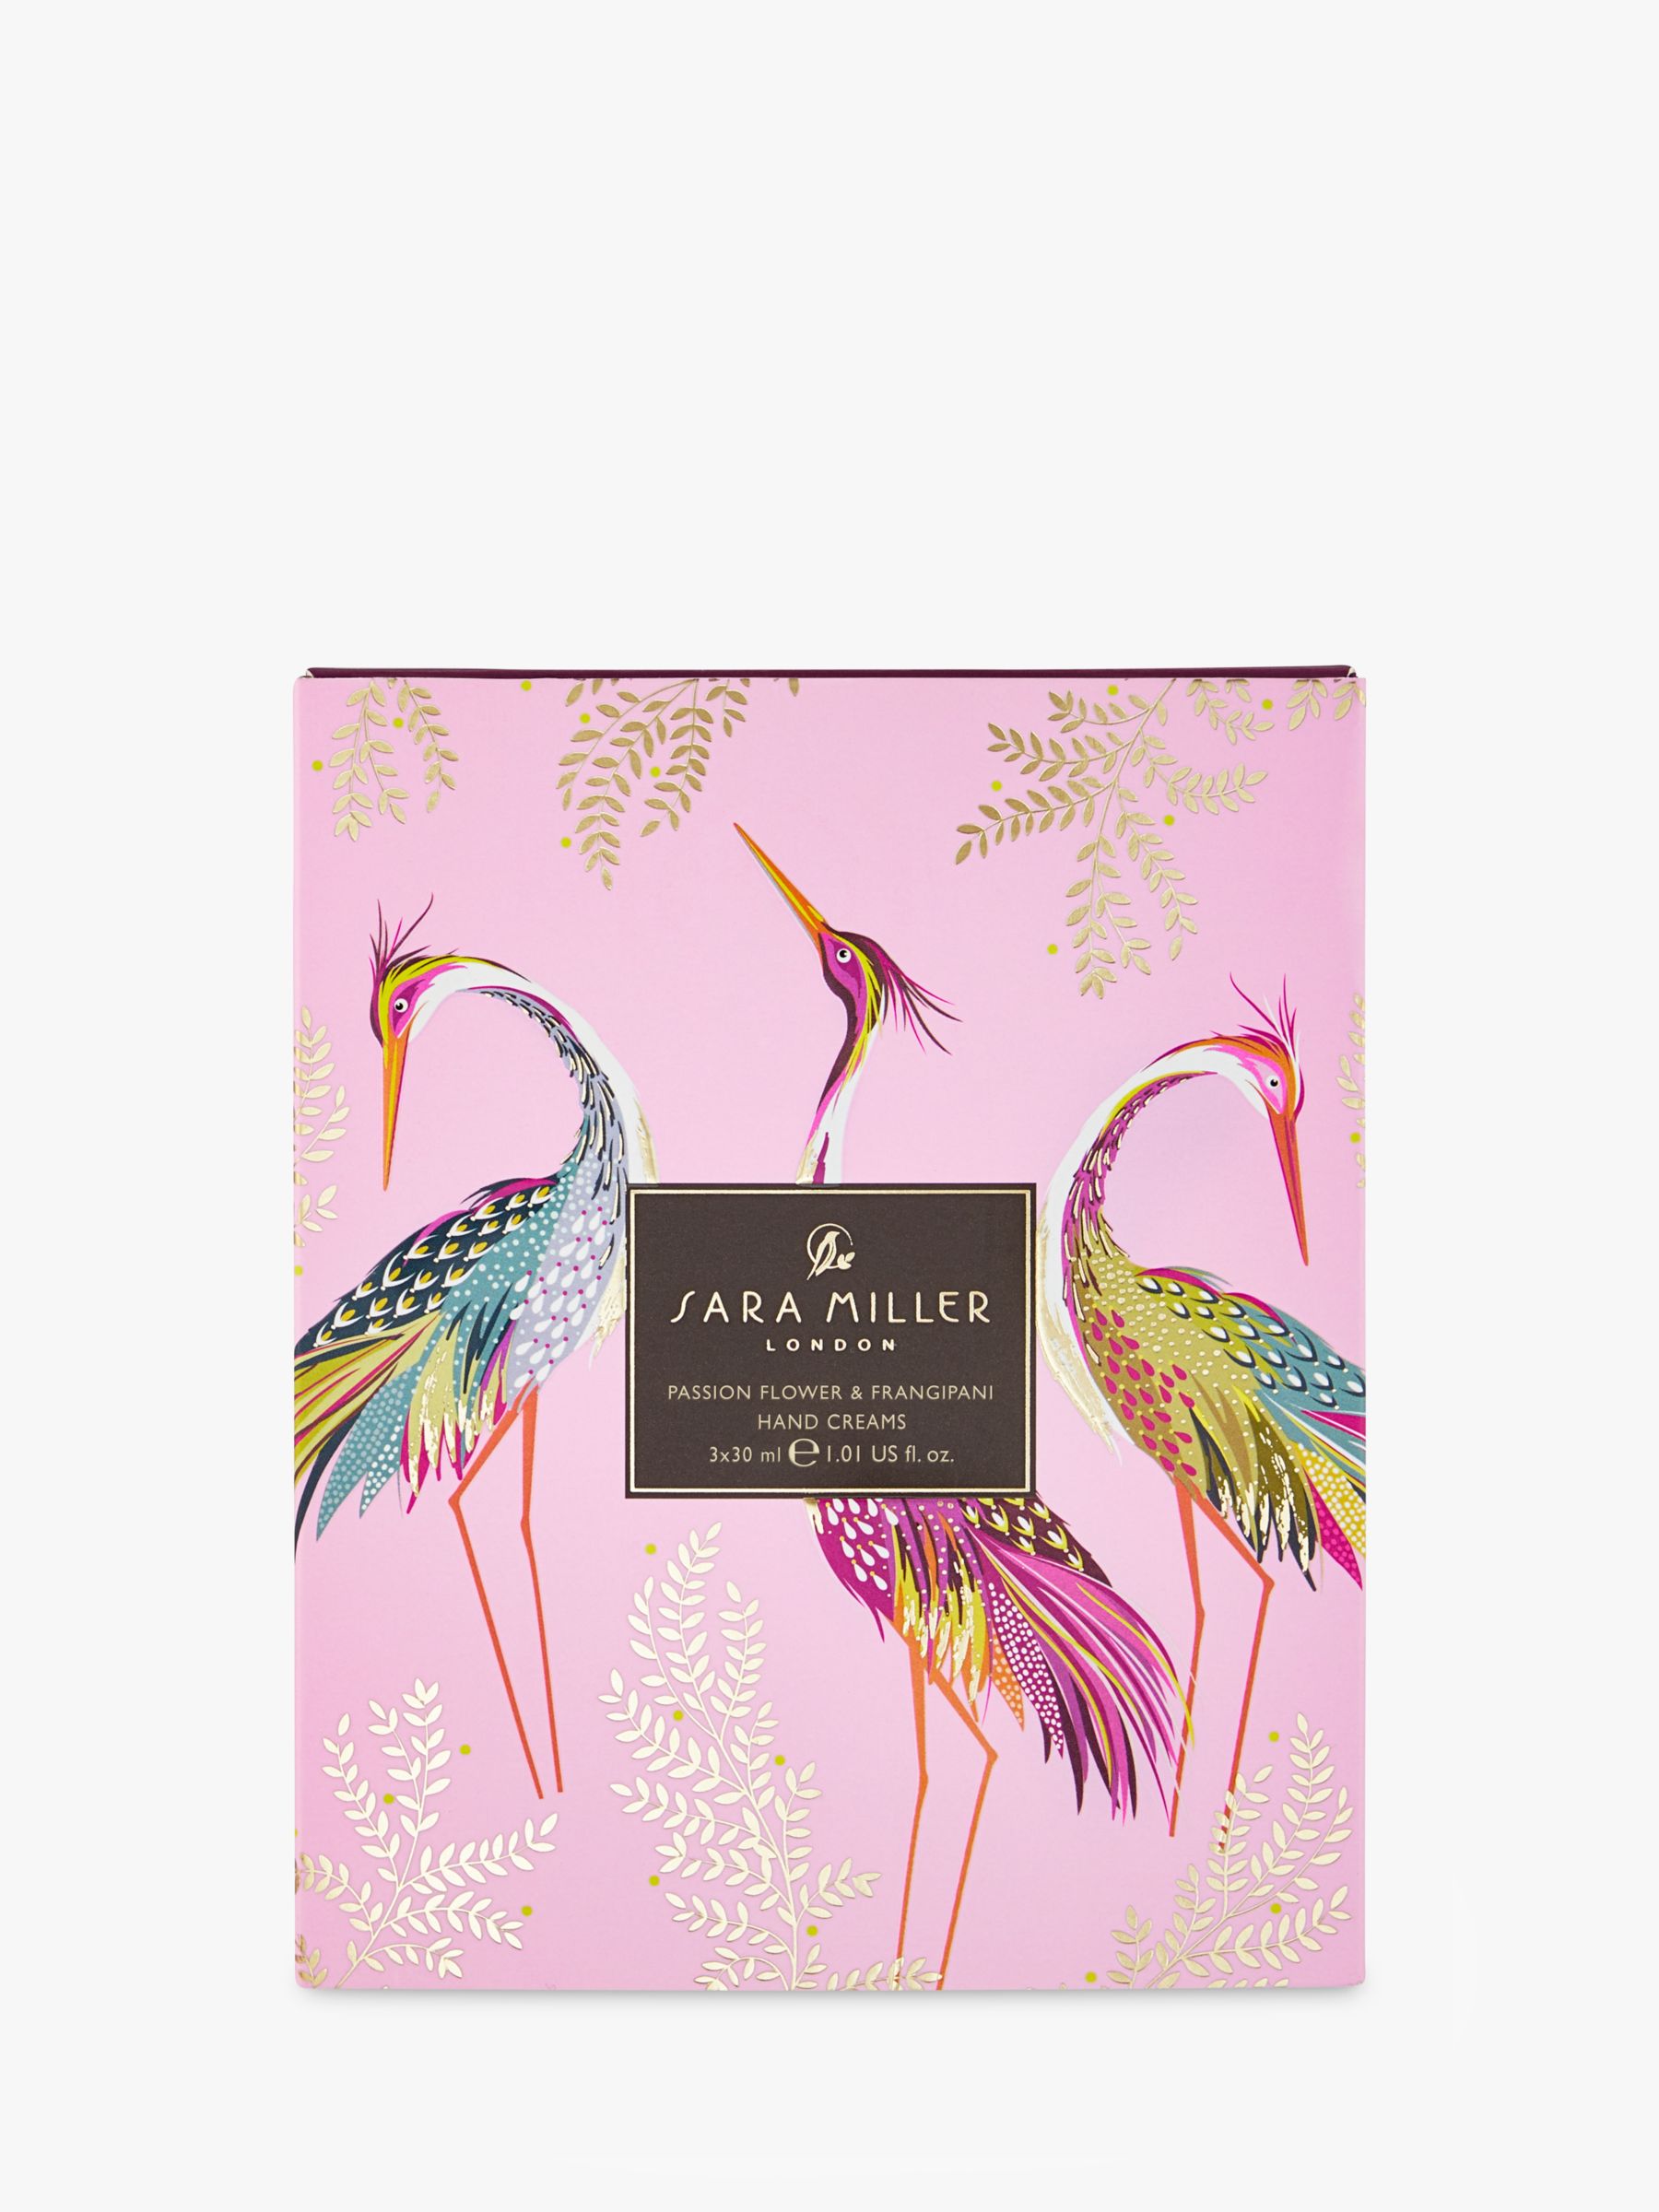 Sara Miller Passion Flower & Frangipani Hand Cream Gift Set 1